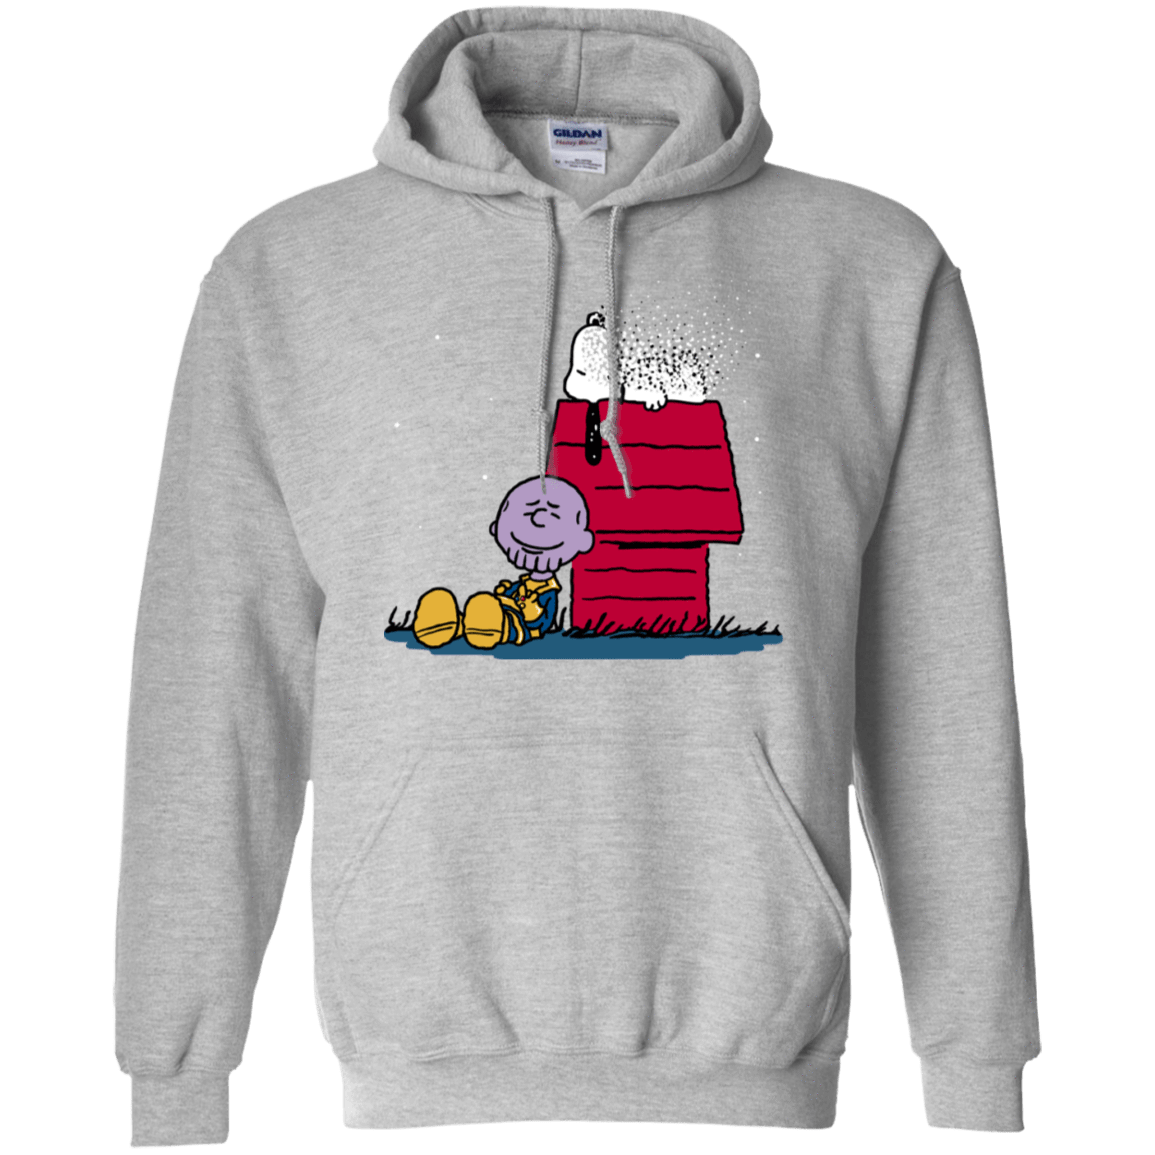 Sweatshirts Sport Grey / S Snapy Pullover Hoodie